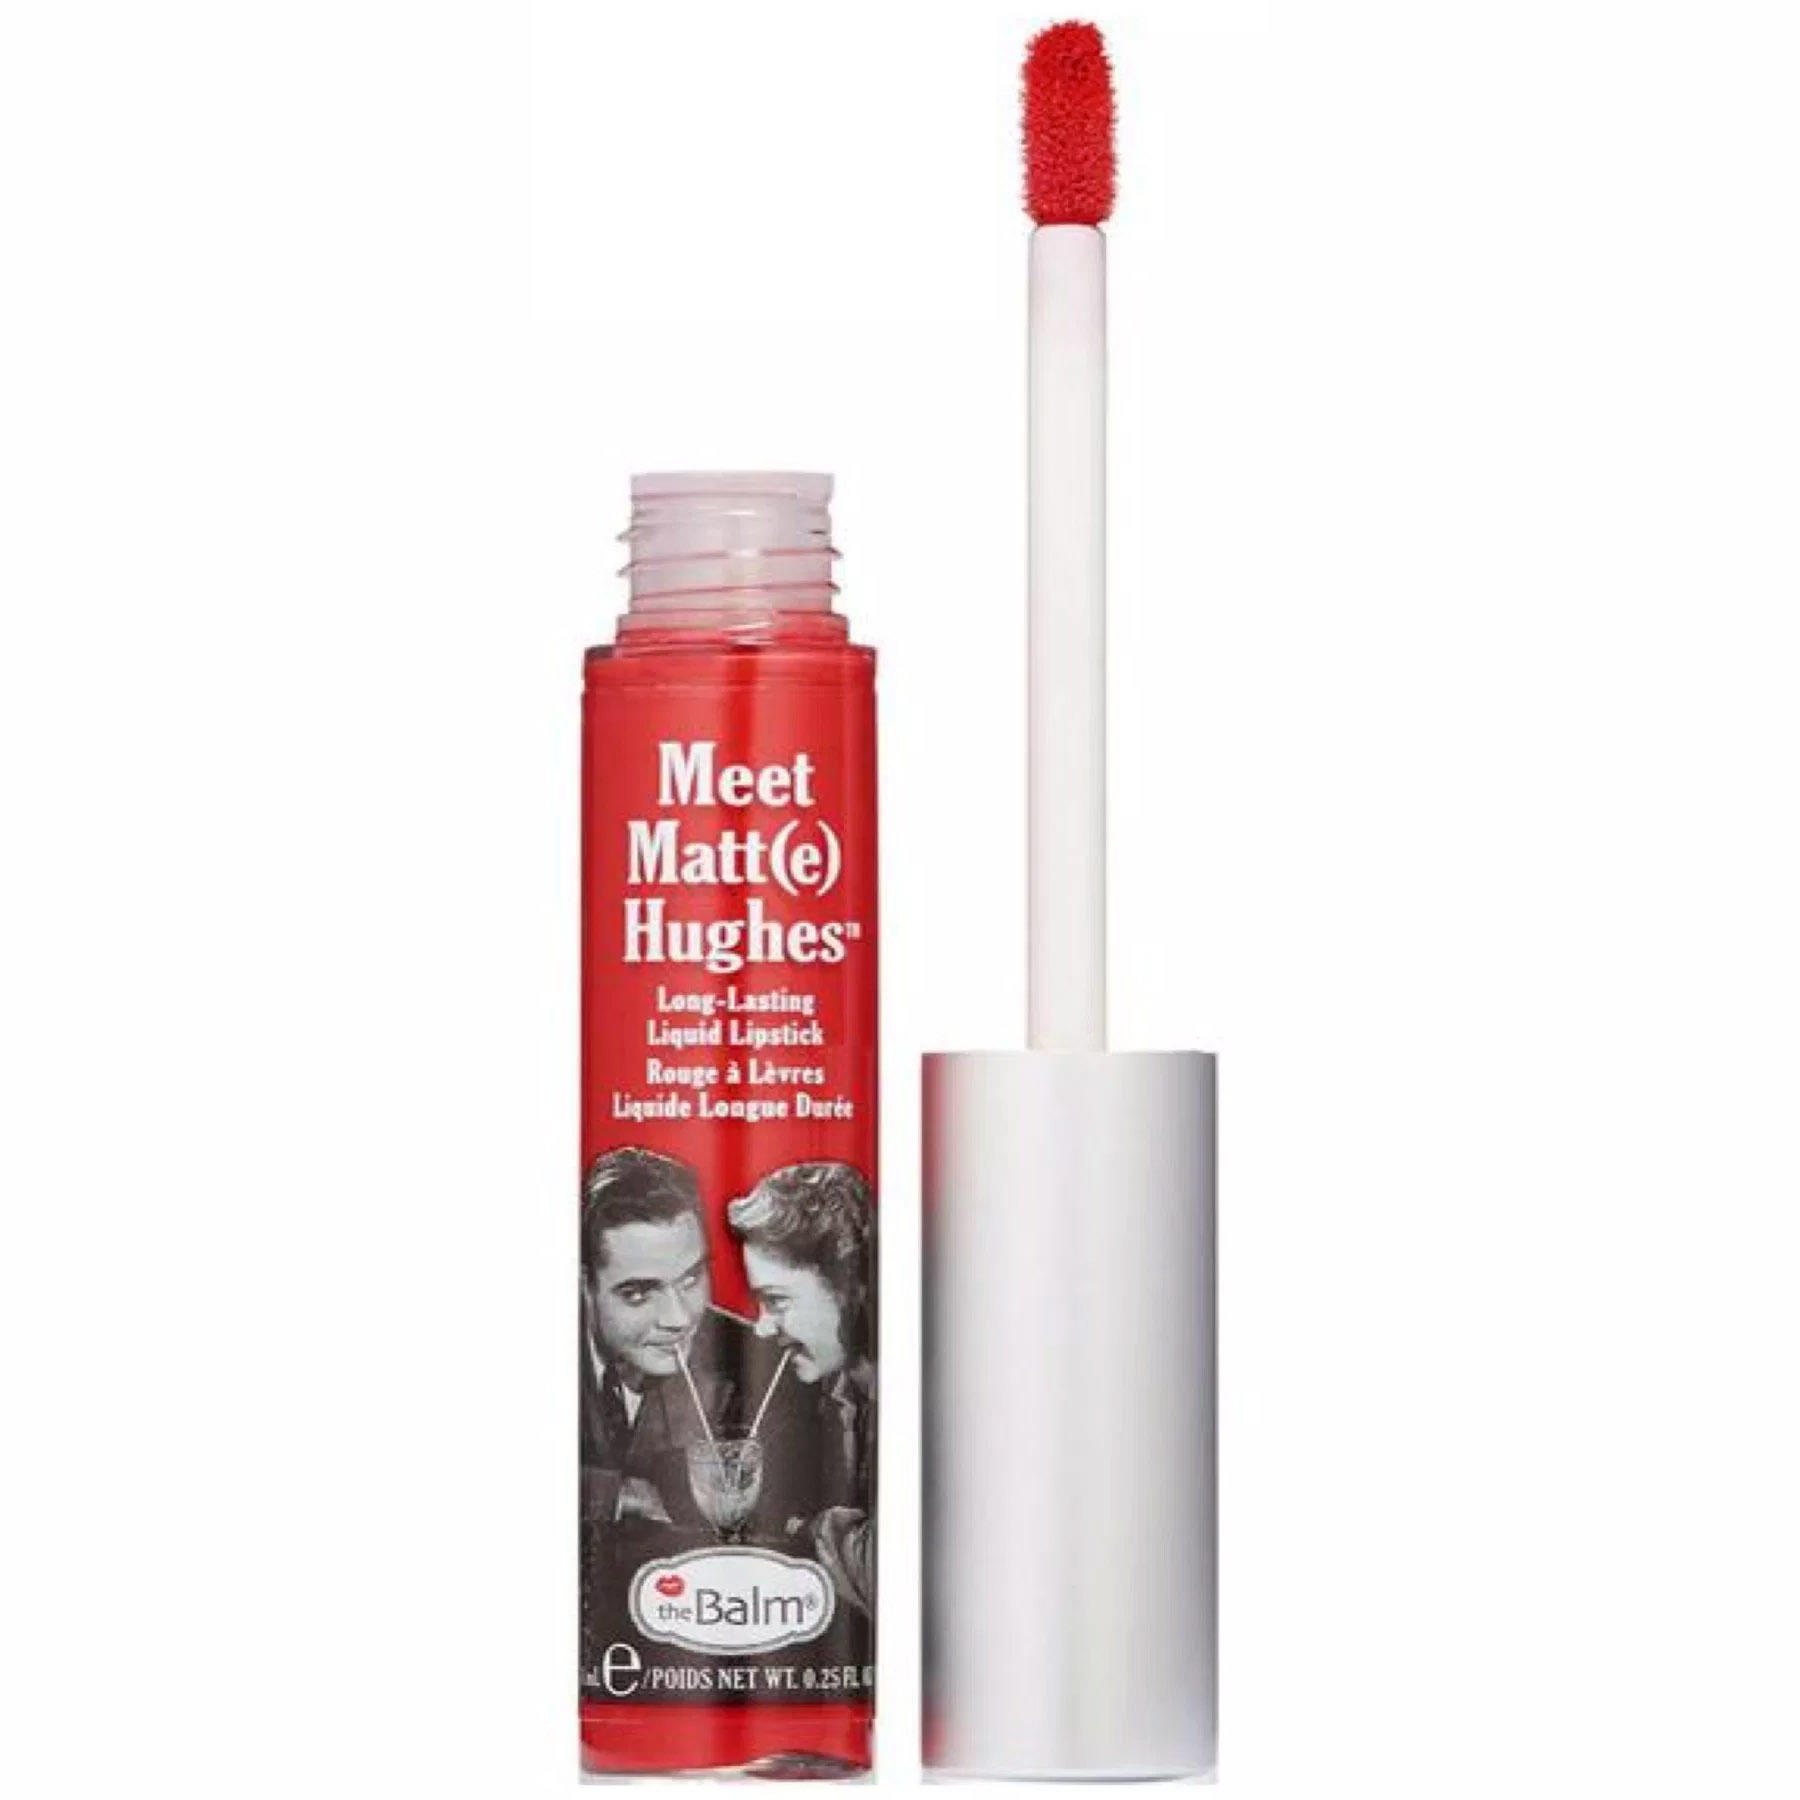 The Balm Long-Lasting Liquid Lipstick Meet Matt(e) Hughes Loyal